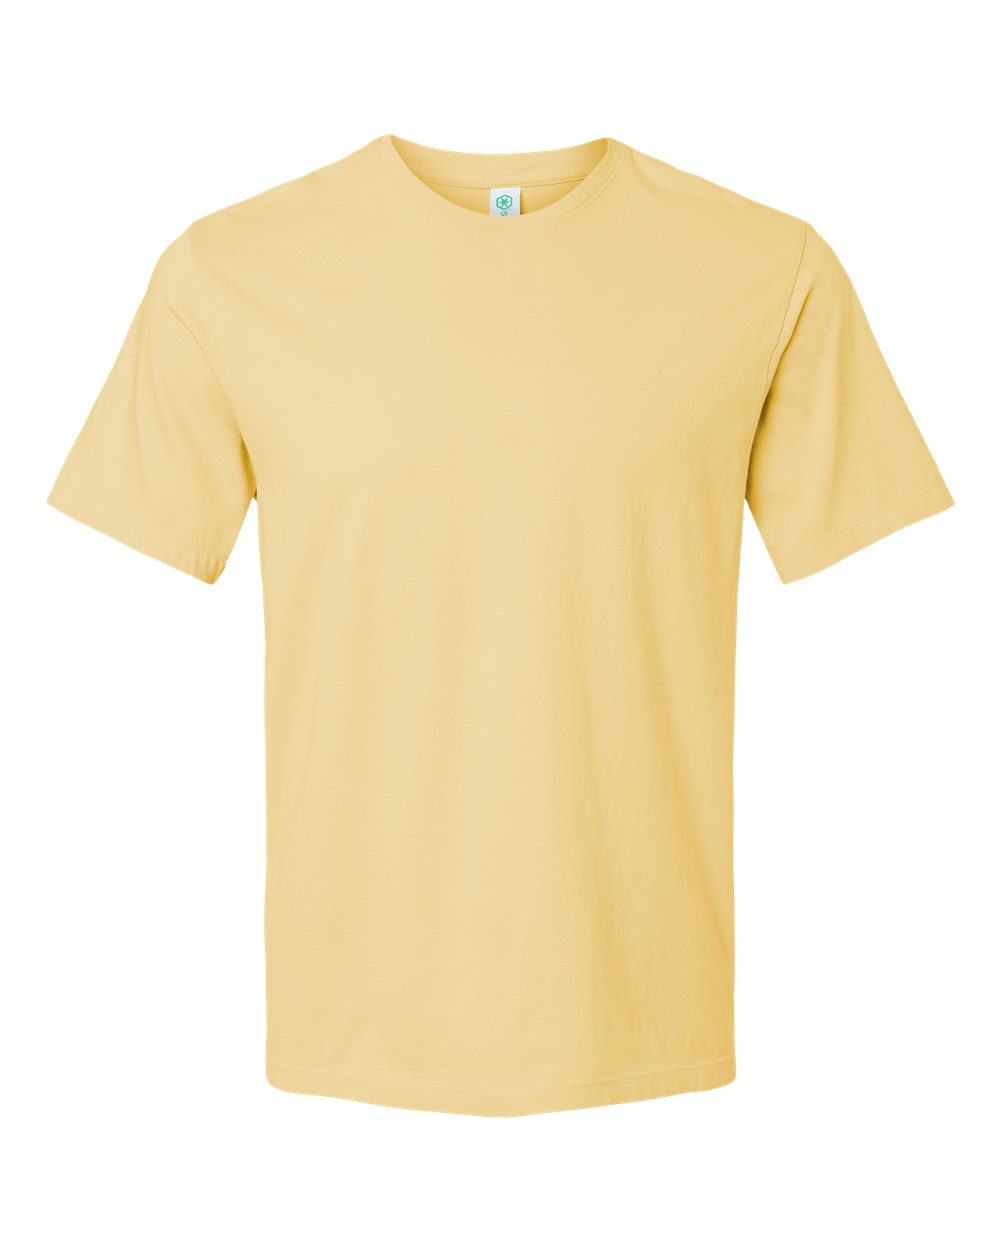 Softshirts® Unisex Organic Cotton T-shirt in yellow